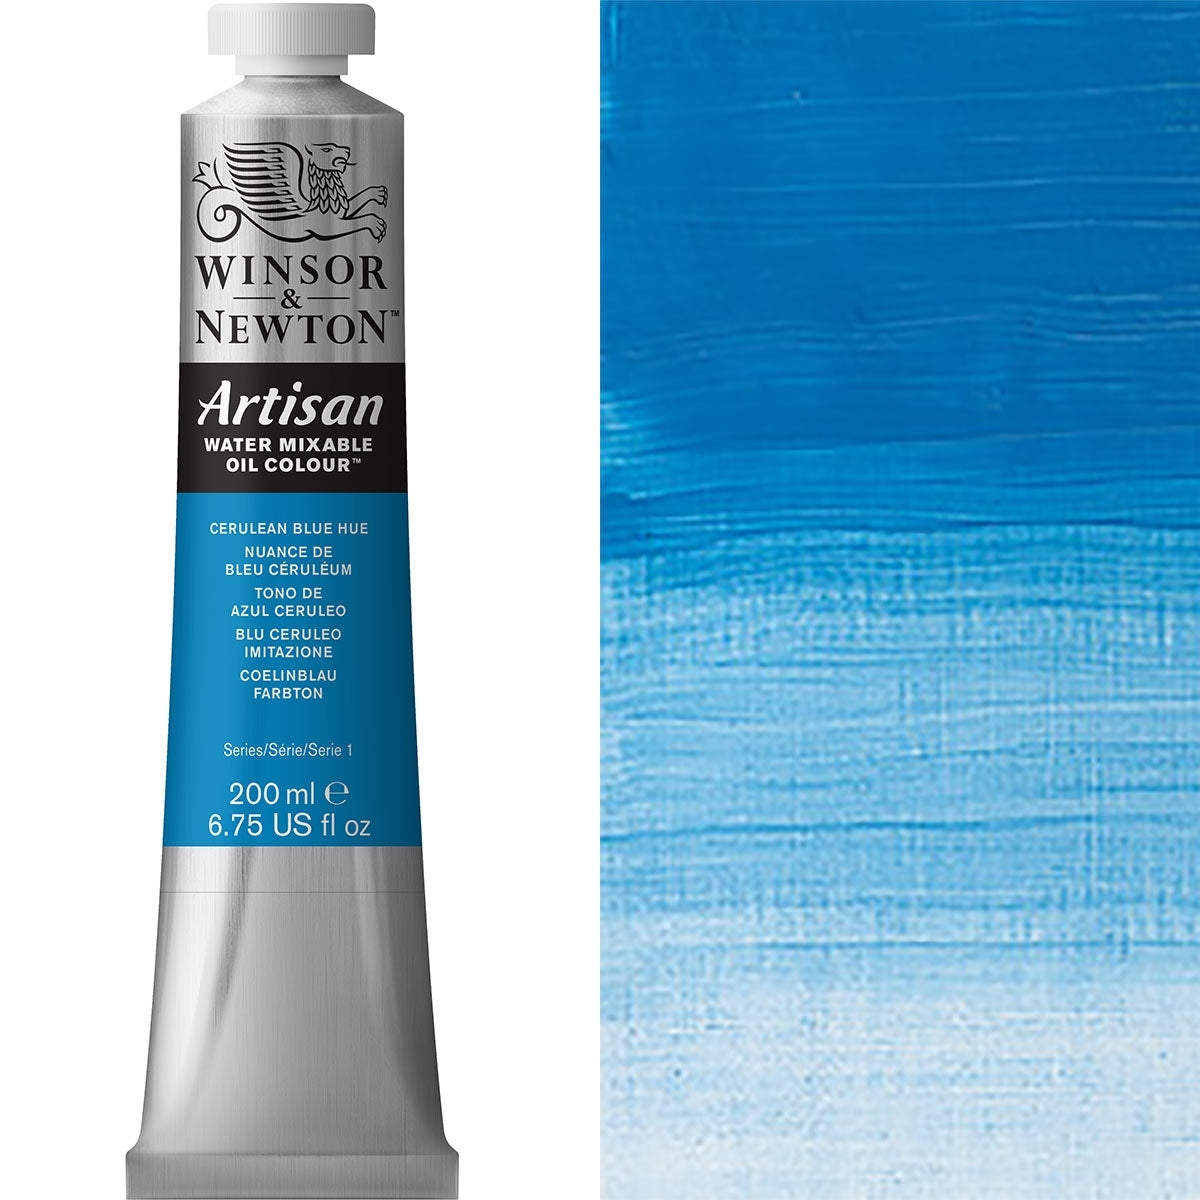 Winsor en Newton - Artisan Oil Color Water Mixable - 200 ml - Cerulean Blue Hue